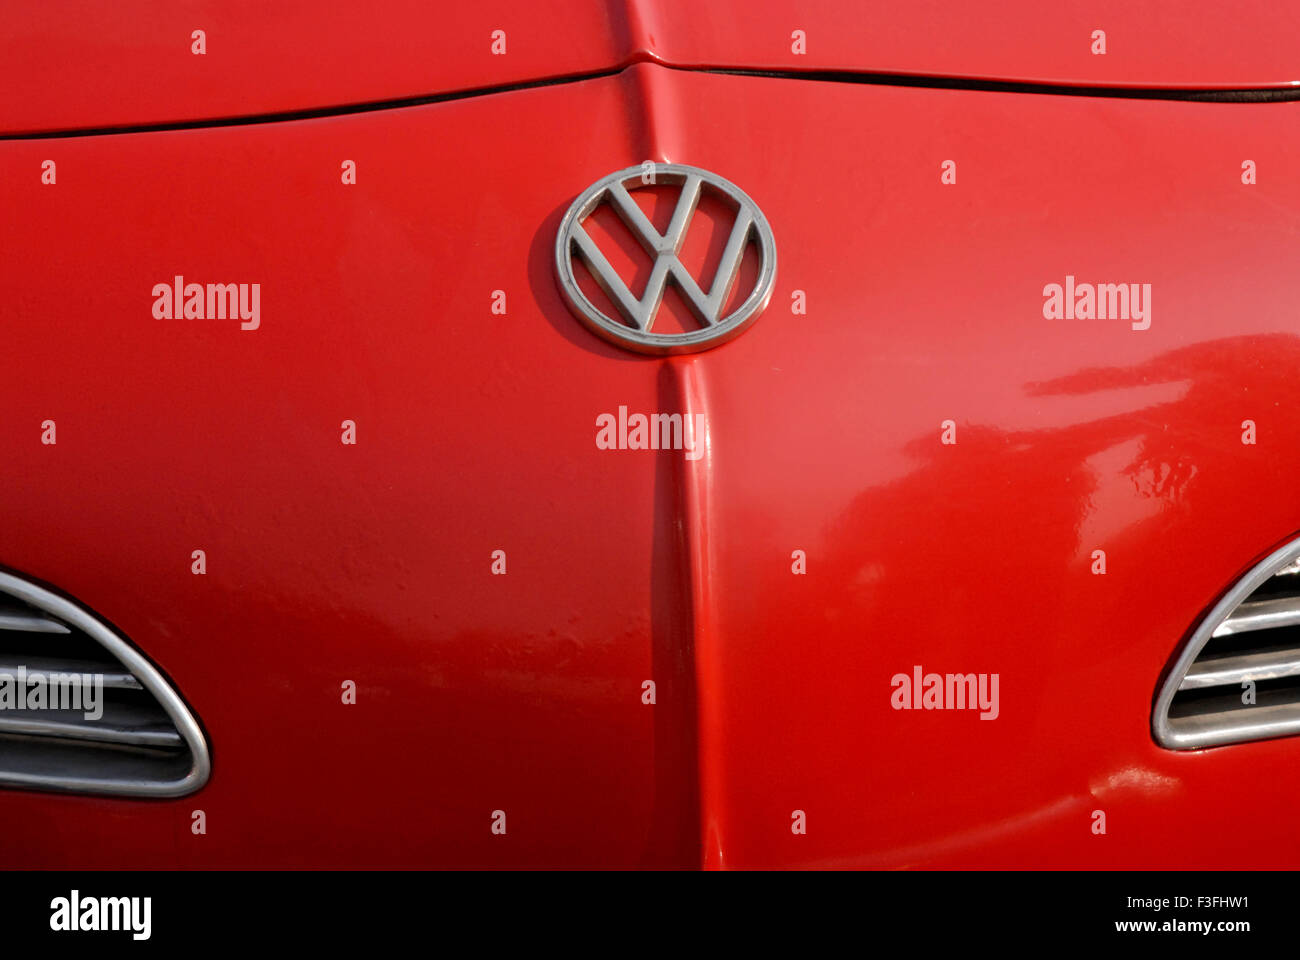 VW car logo, Volkswagen car, antique car, classic car, old car, vintage car Stock Photo